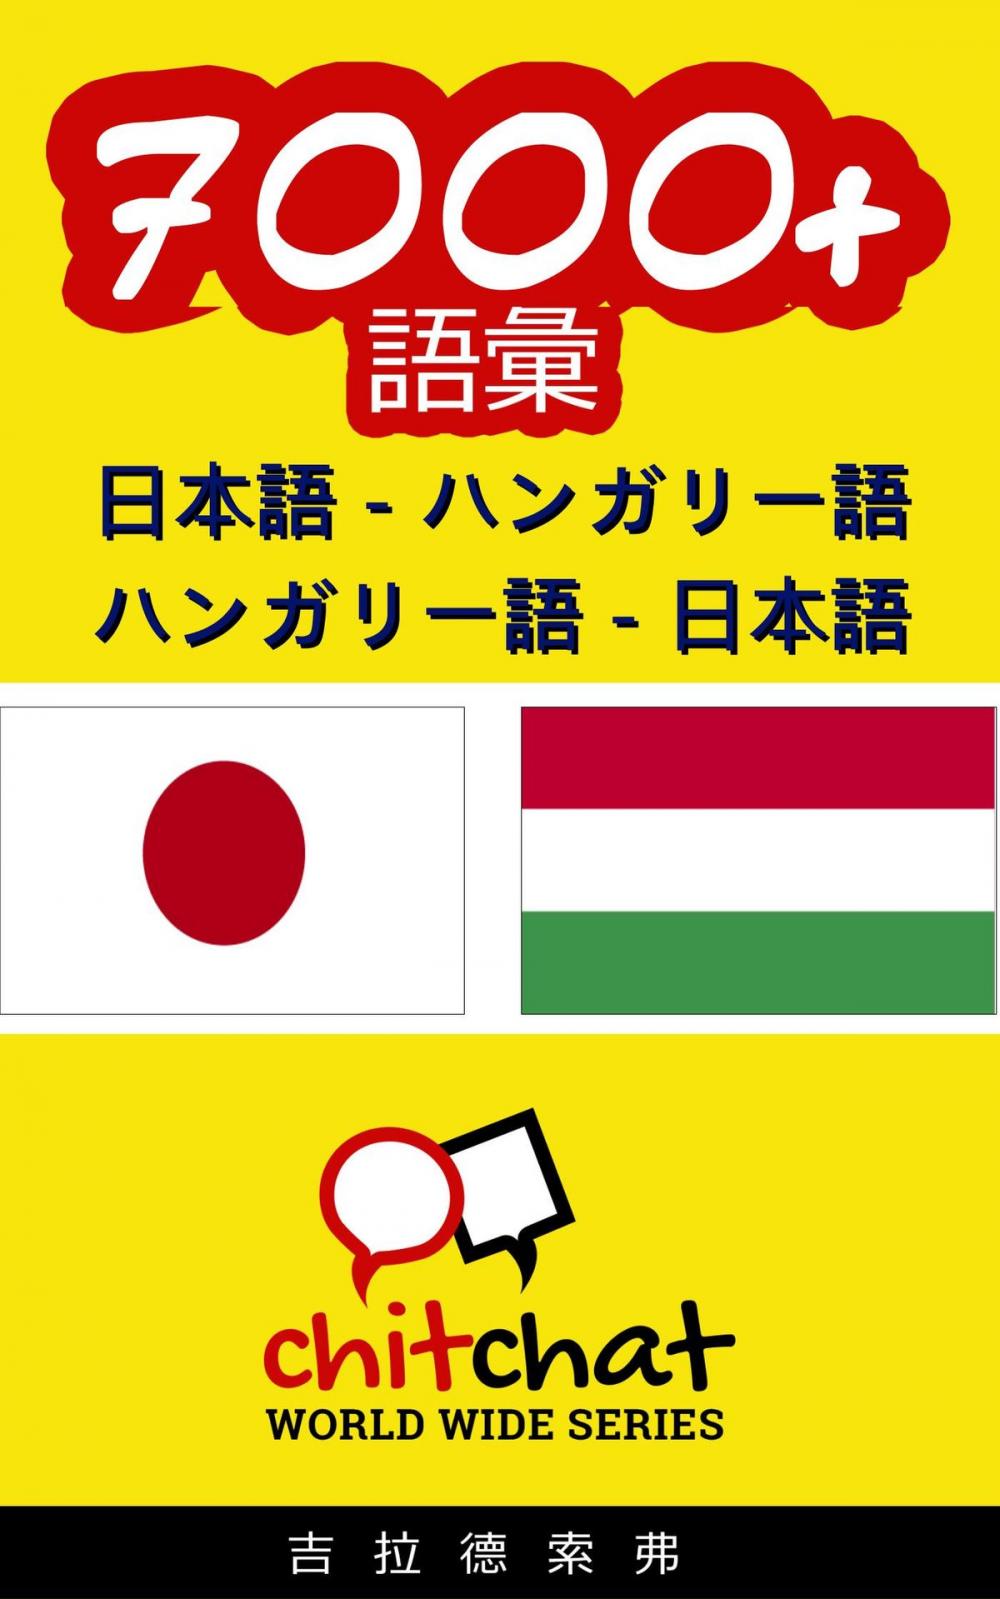 Big bigCover of 7000+ 日本語 - ハンガリー語 ハンガリー語 - 日本語 語彙